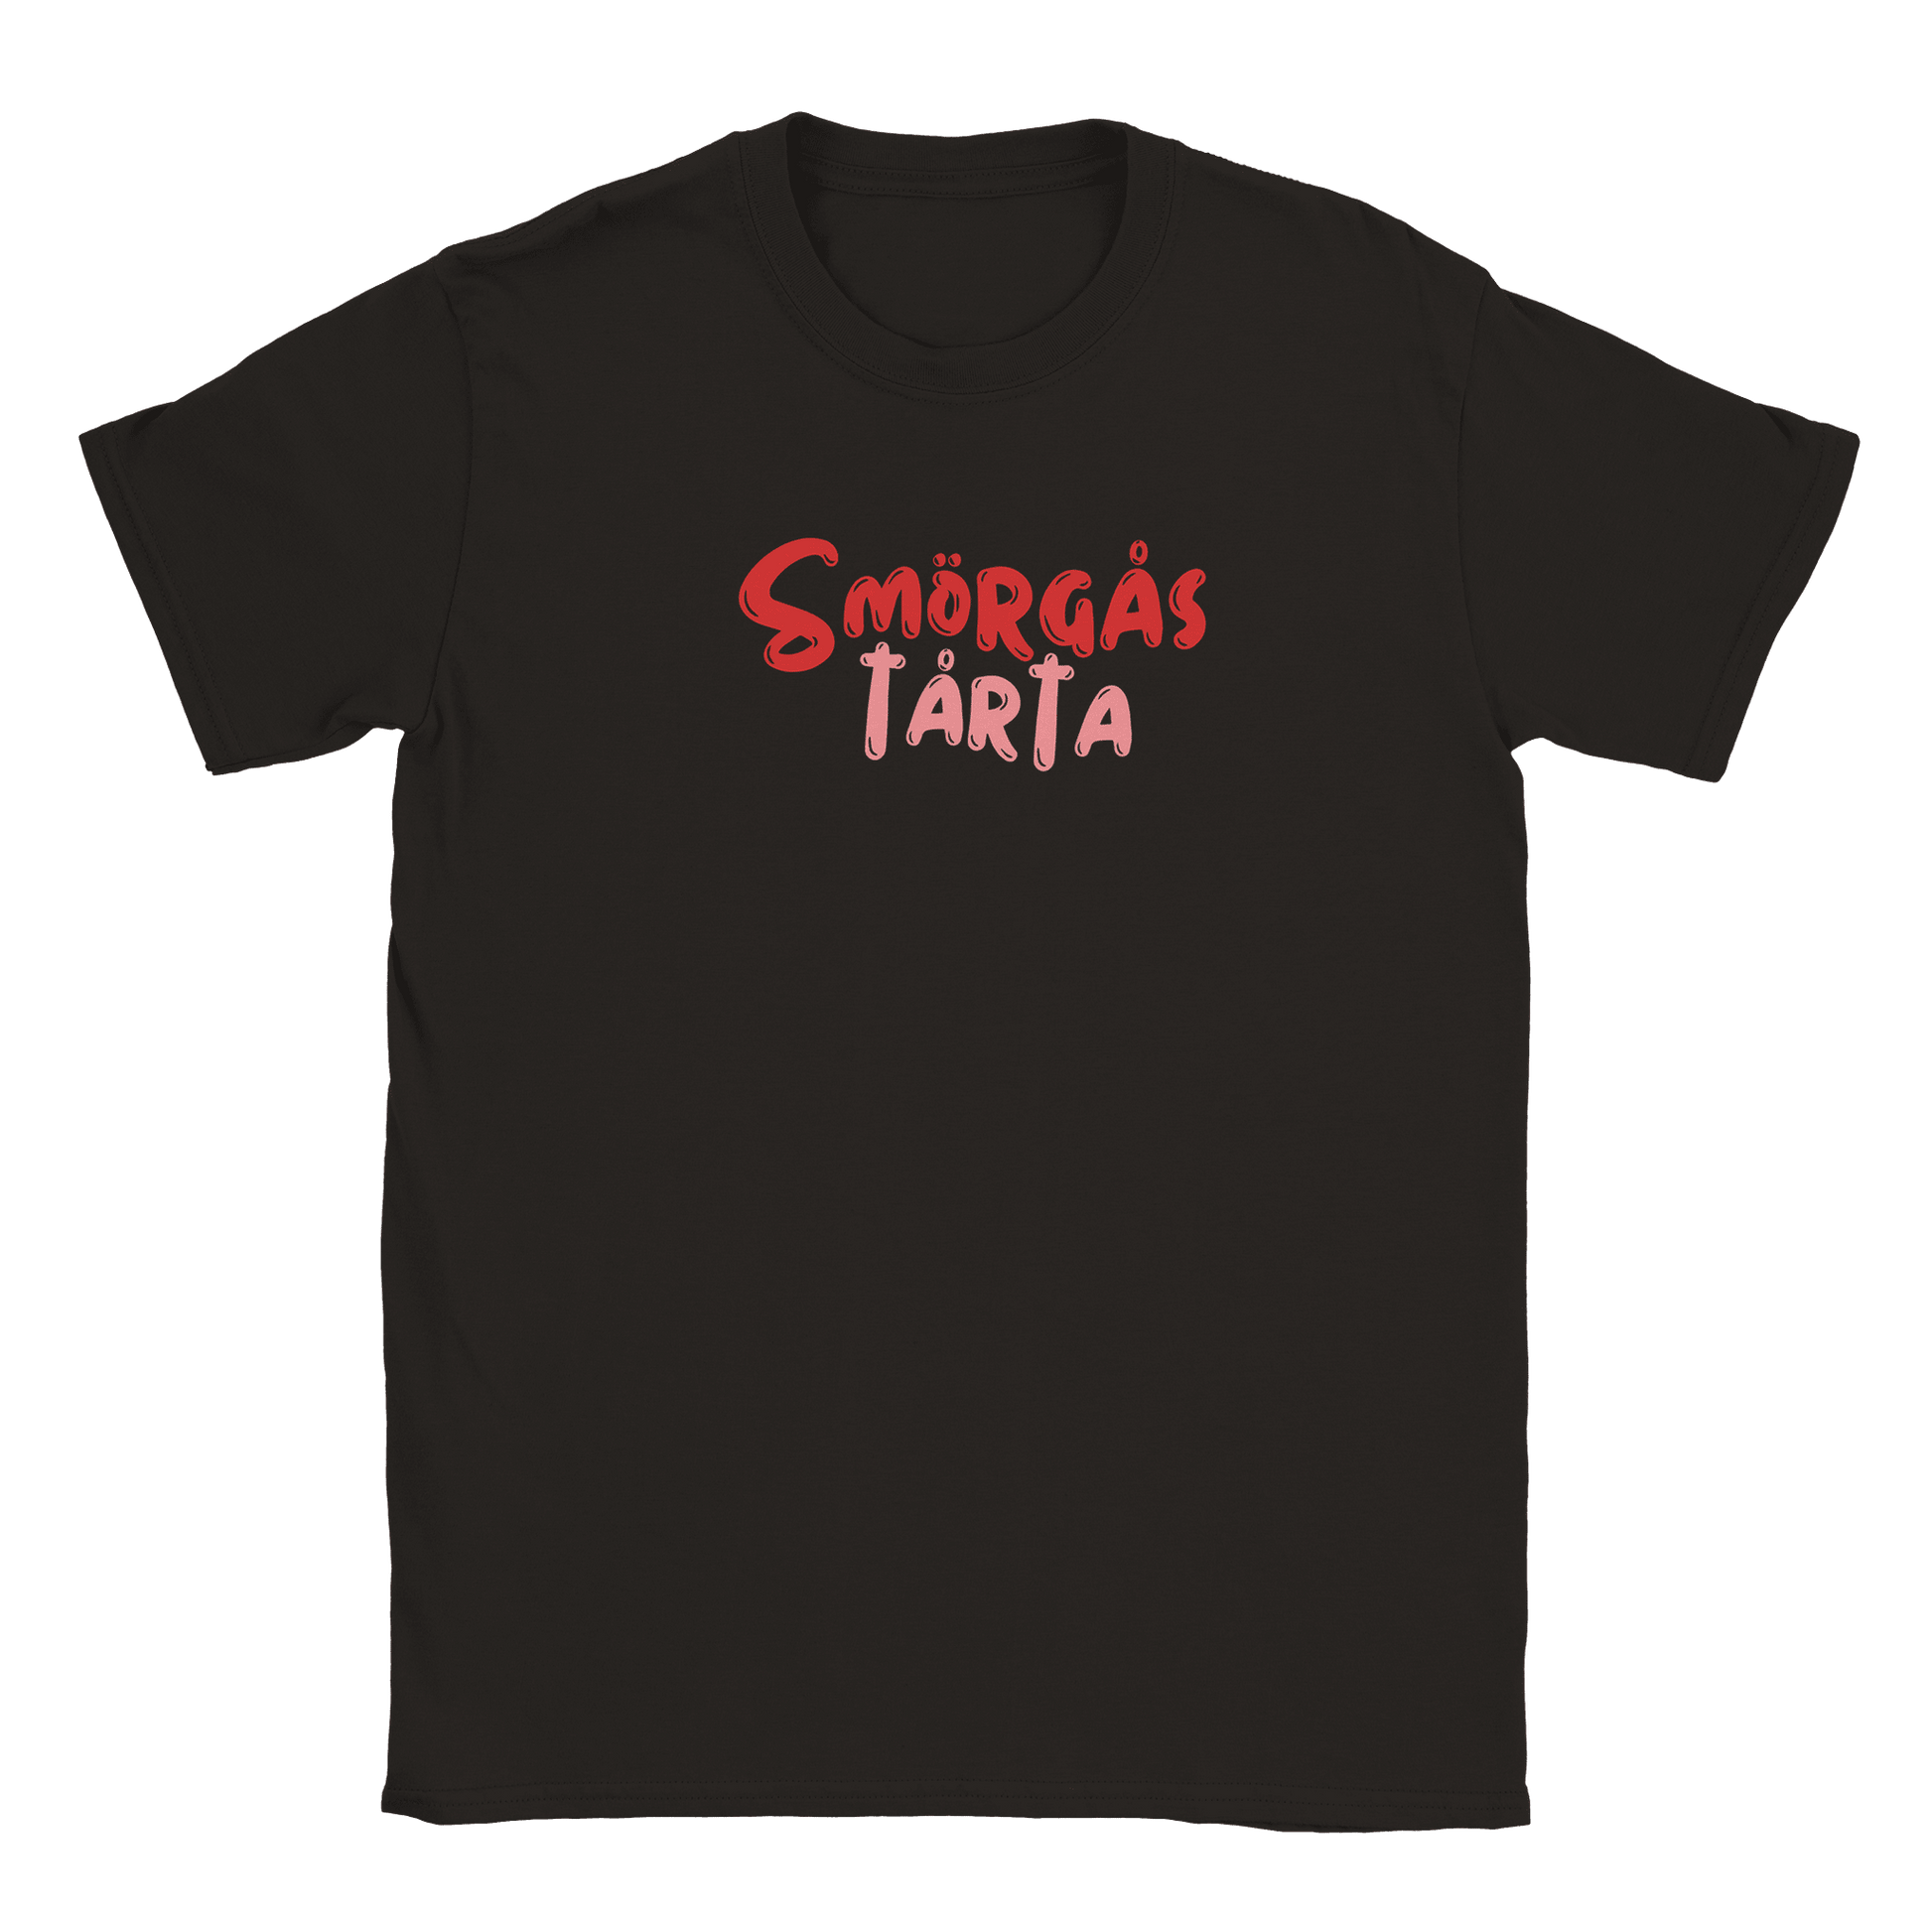 Smörgåstårta - T-shirt Svart